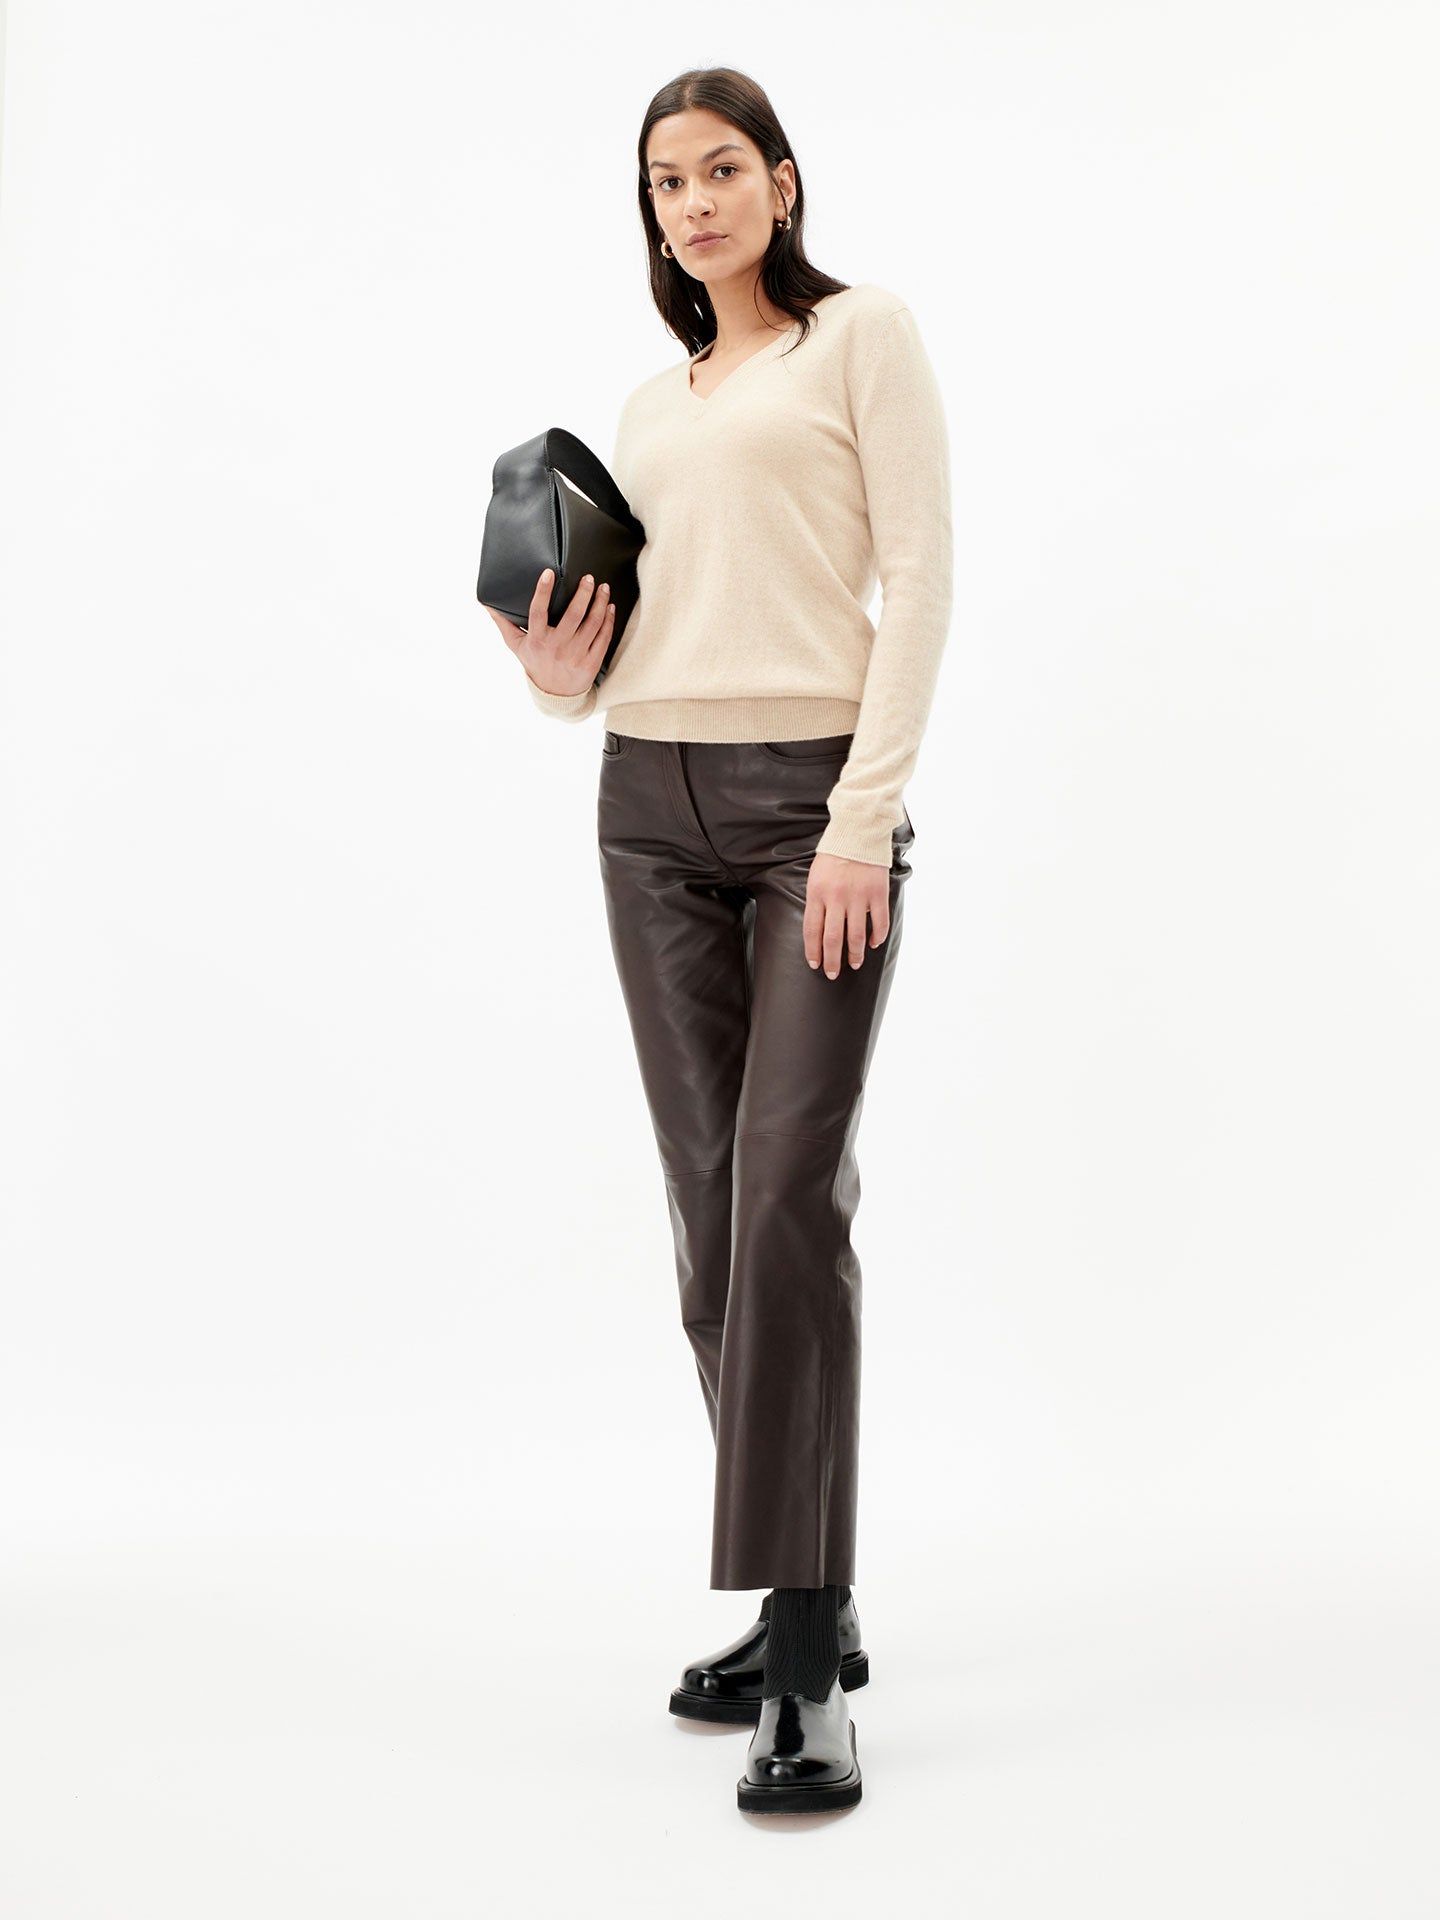 Women's Cashmere V-Neck Sweater Beige - Gobi Cashmere